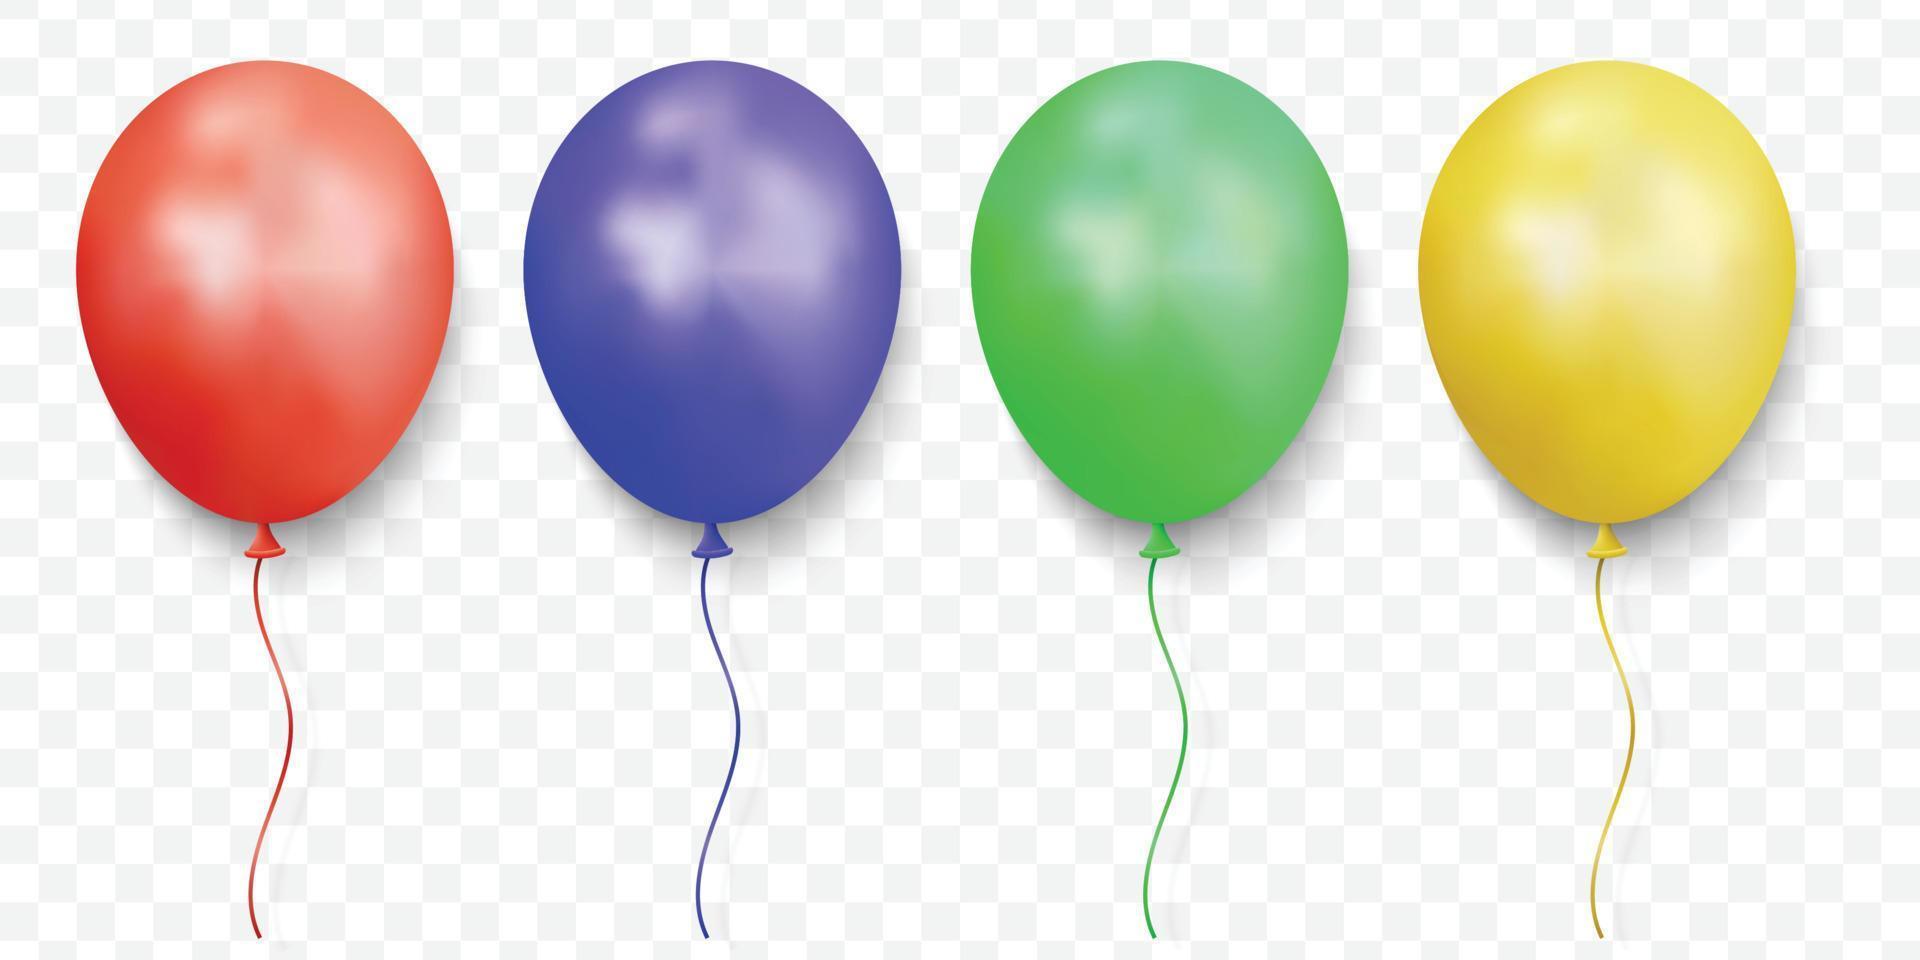 Realistic glossy balloons vector